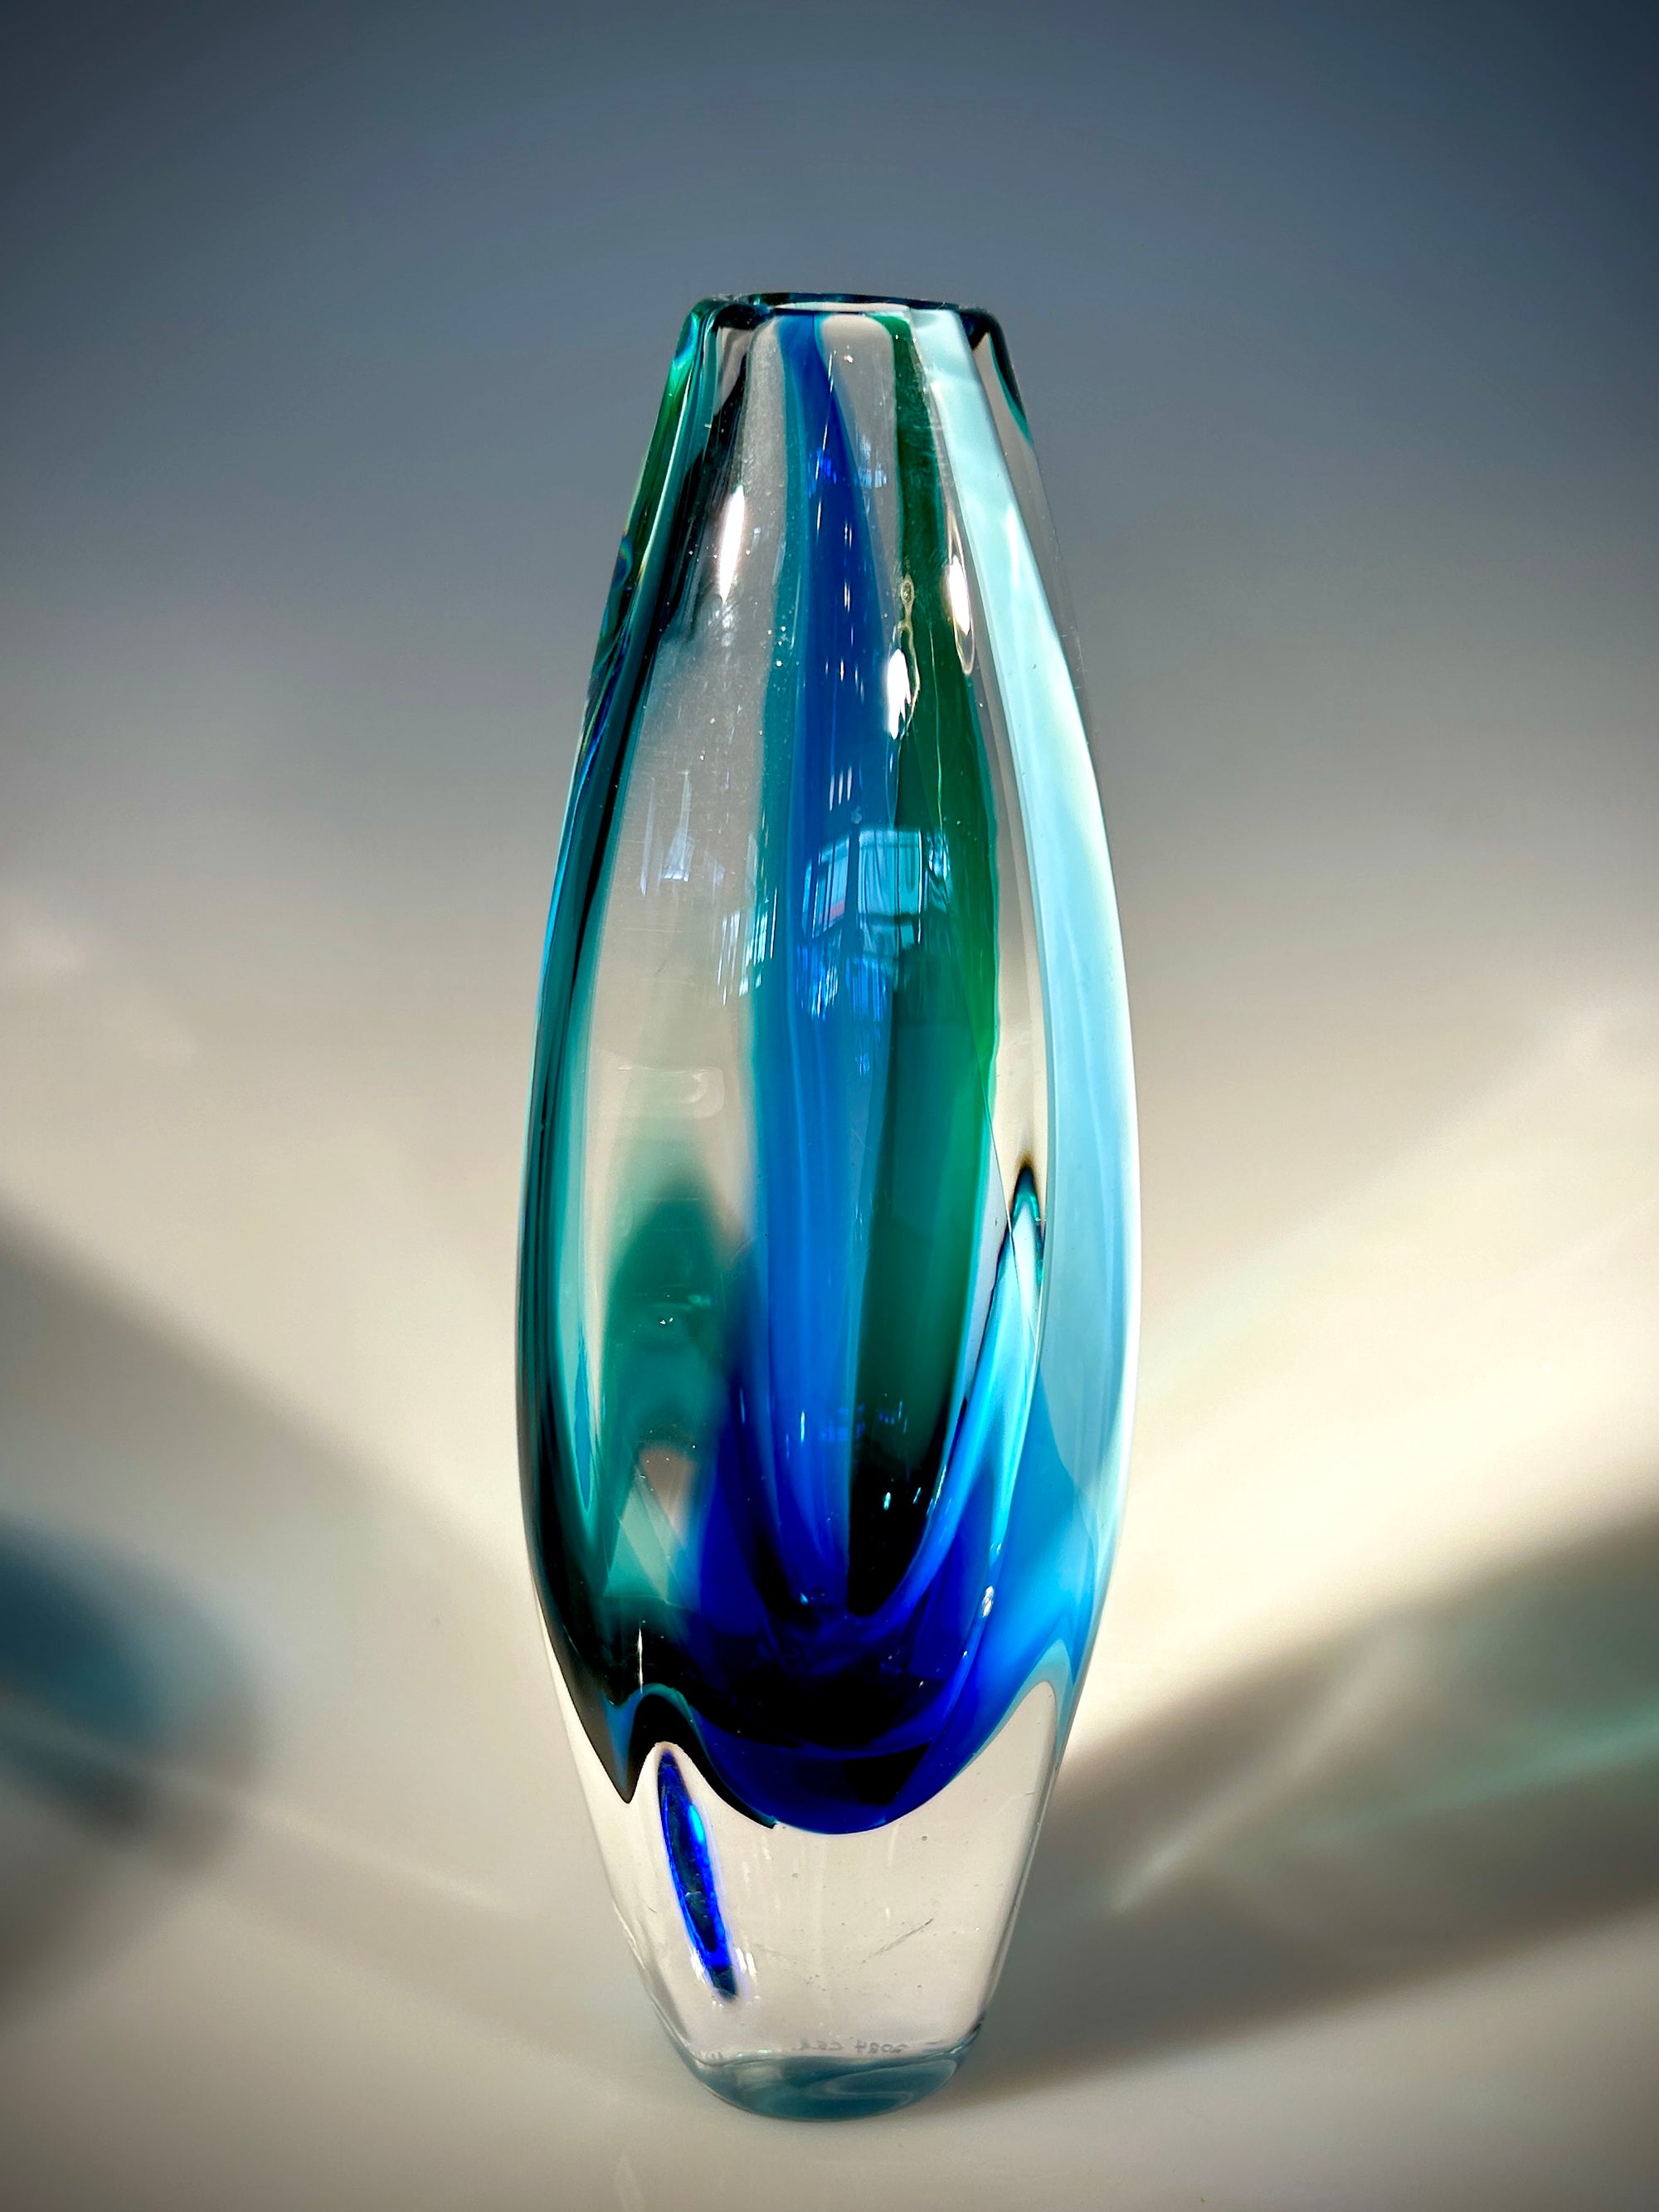 Blue/Green Jewel Vase